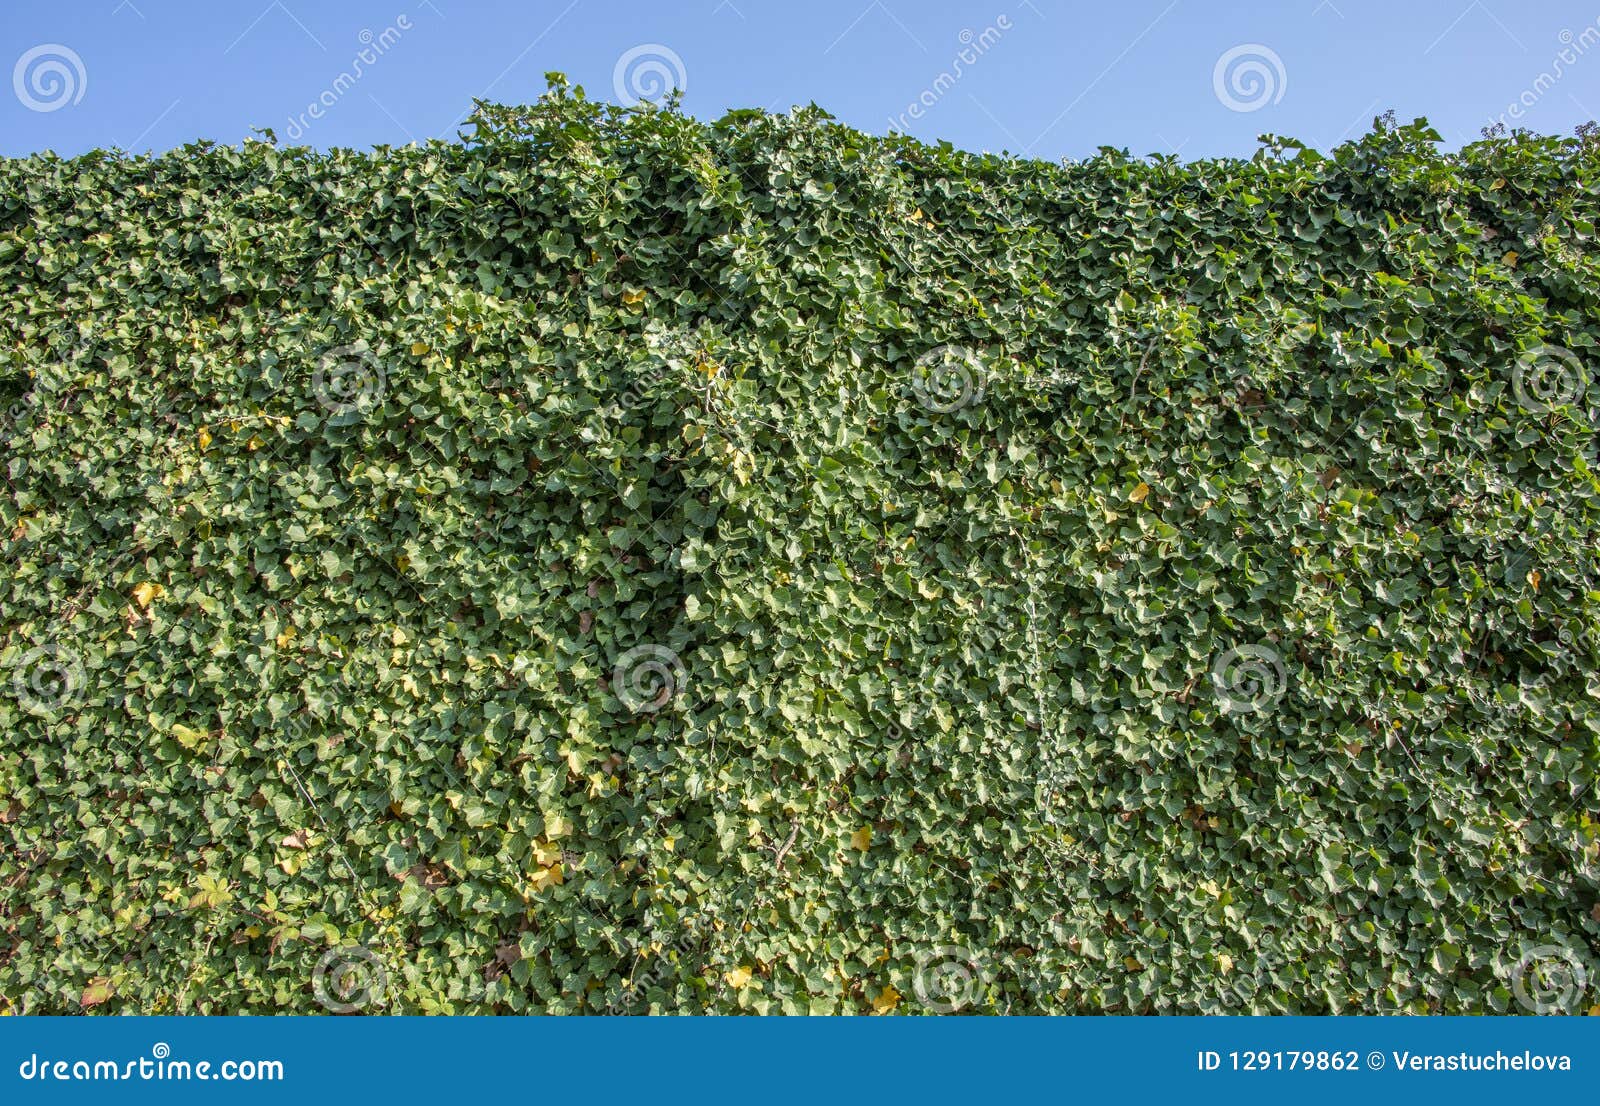 green ivy foliage hedera helix on a wall